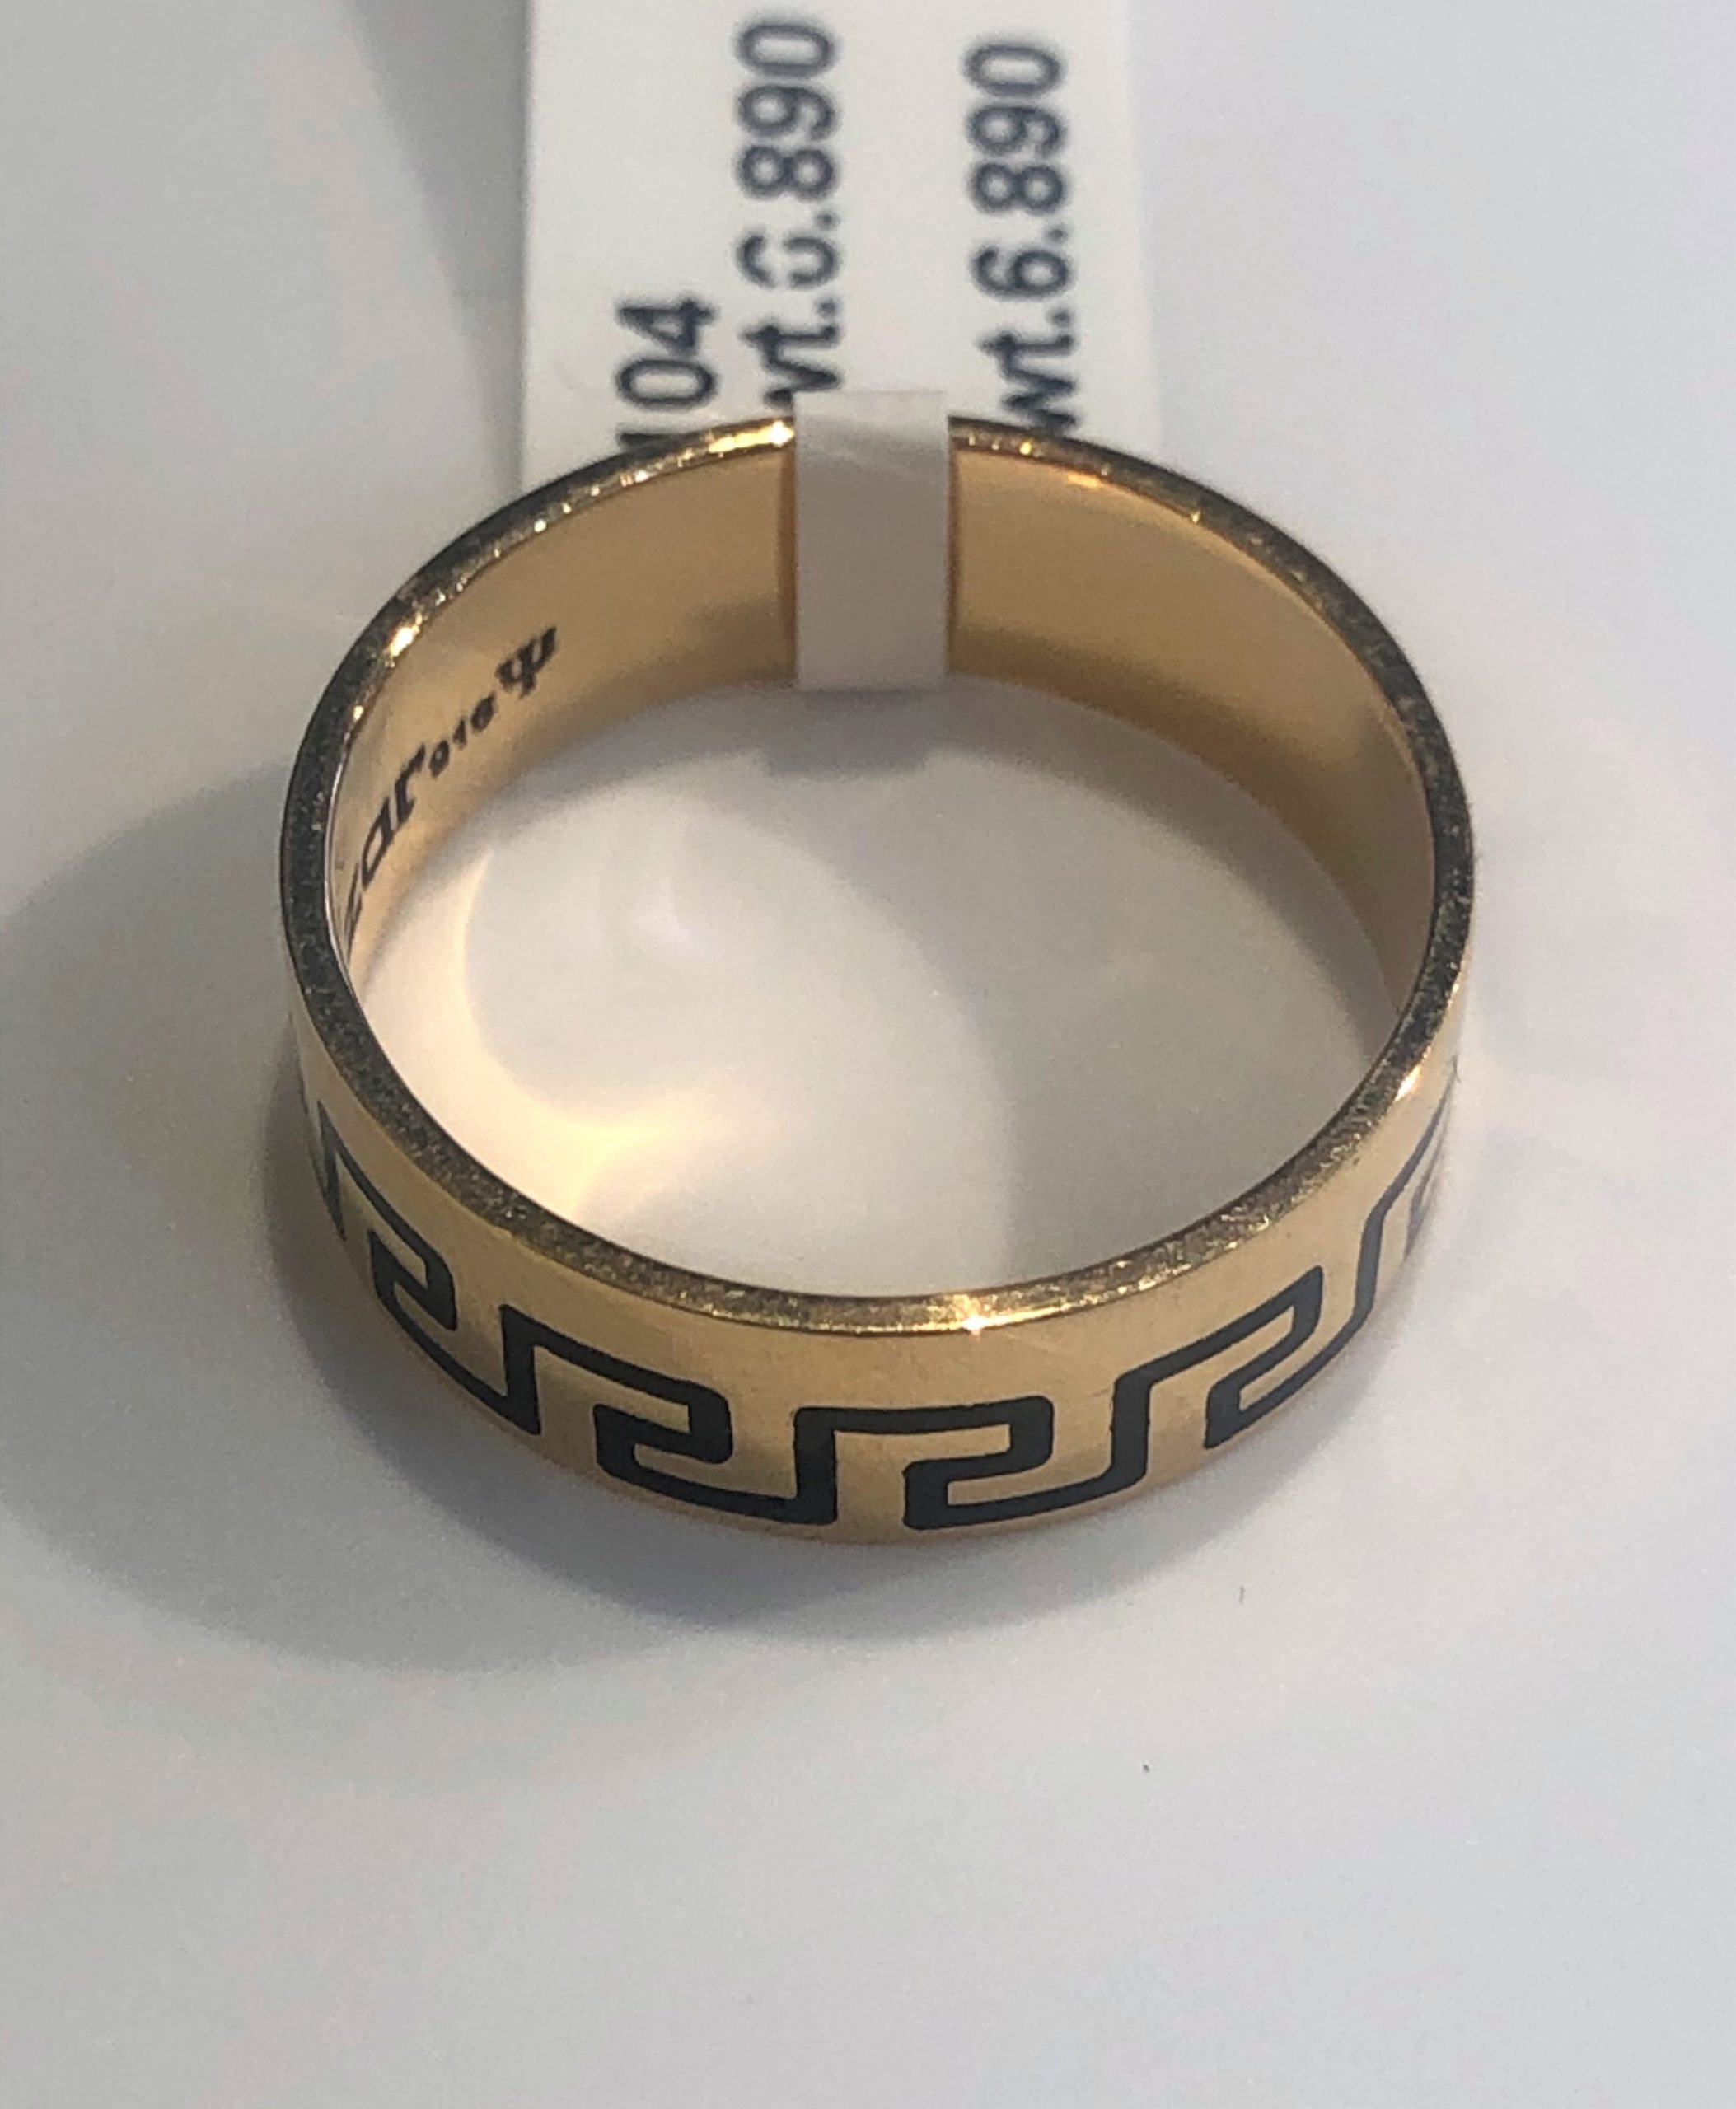 Rose Gold Titanium Wedding Engagement Ring For Men Online In Pakistan – The  Dapper Shop